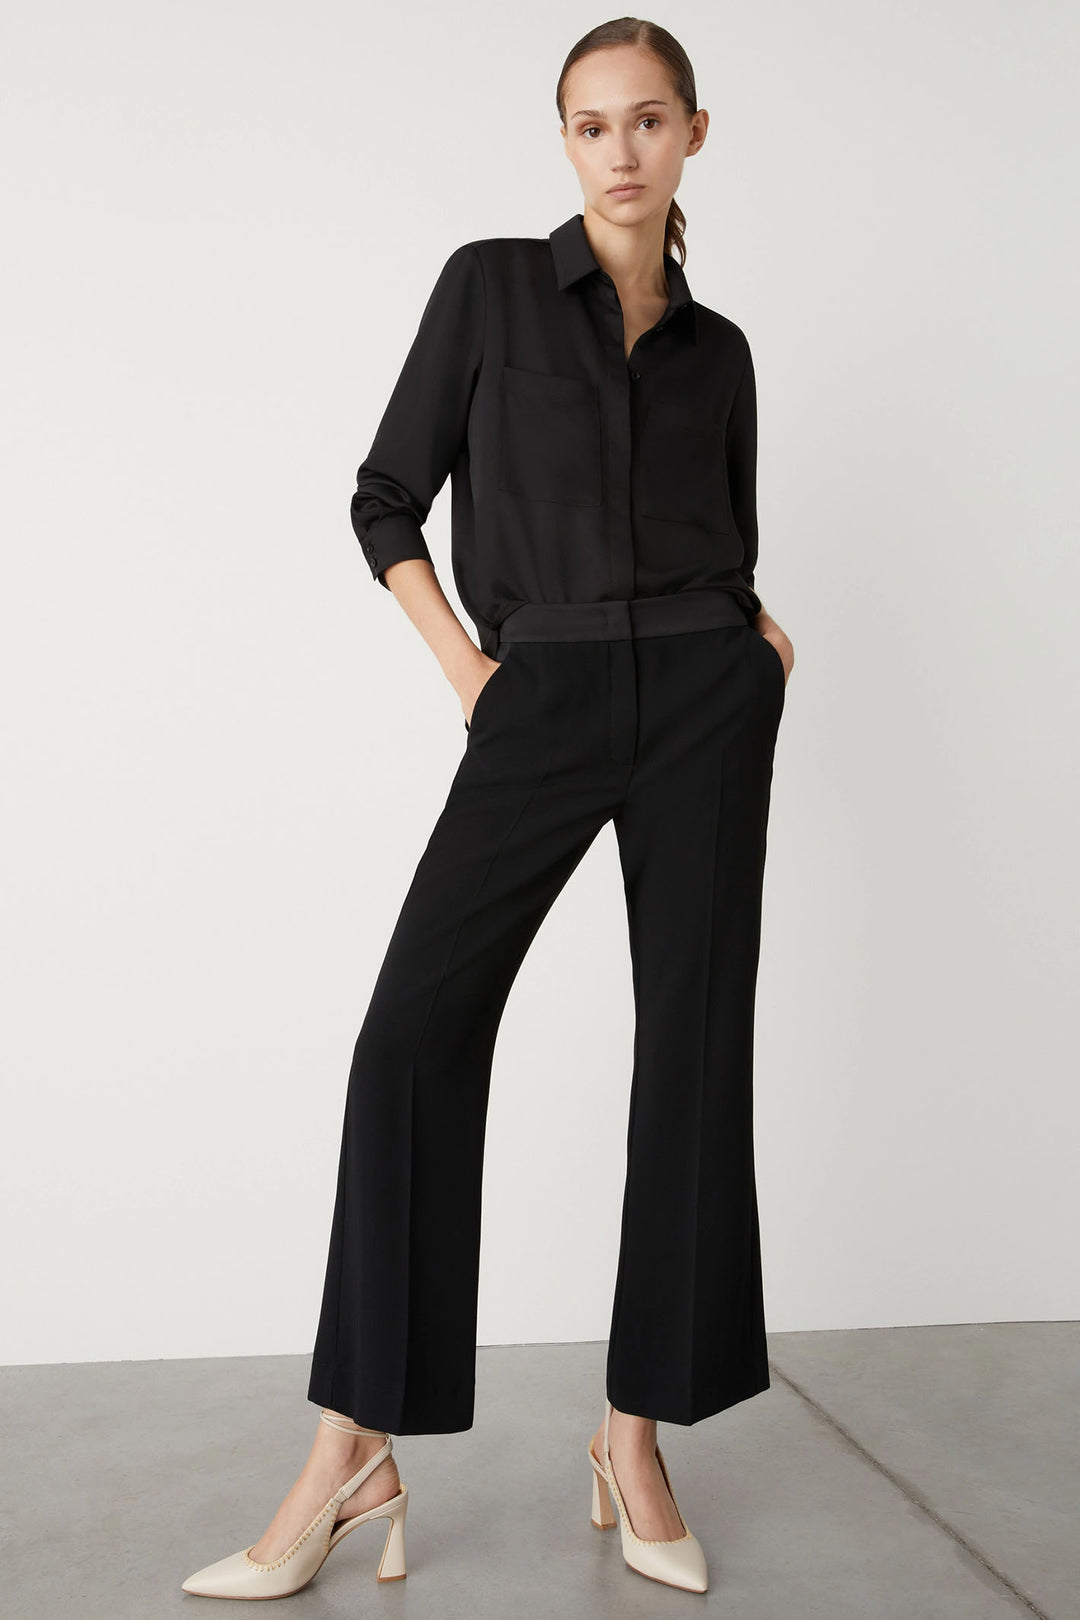 Marella Belair 2413131063200 Black Crepe Kick Flare Trousers - Olivia Grace Fashion